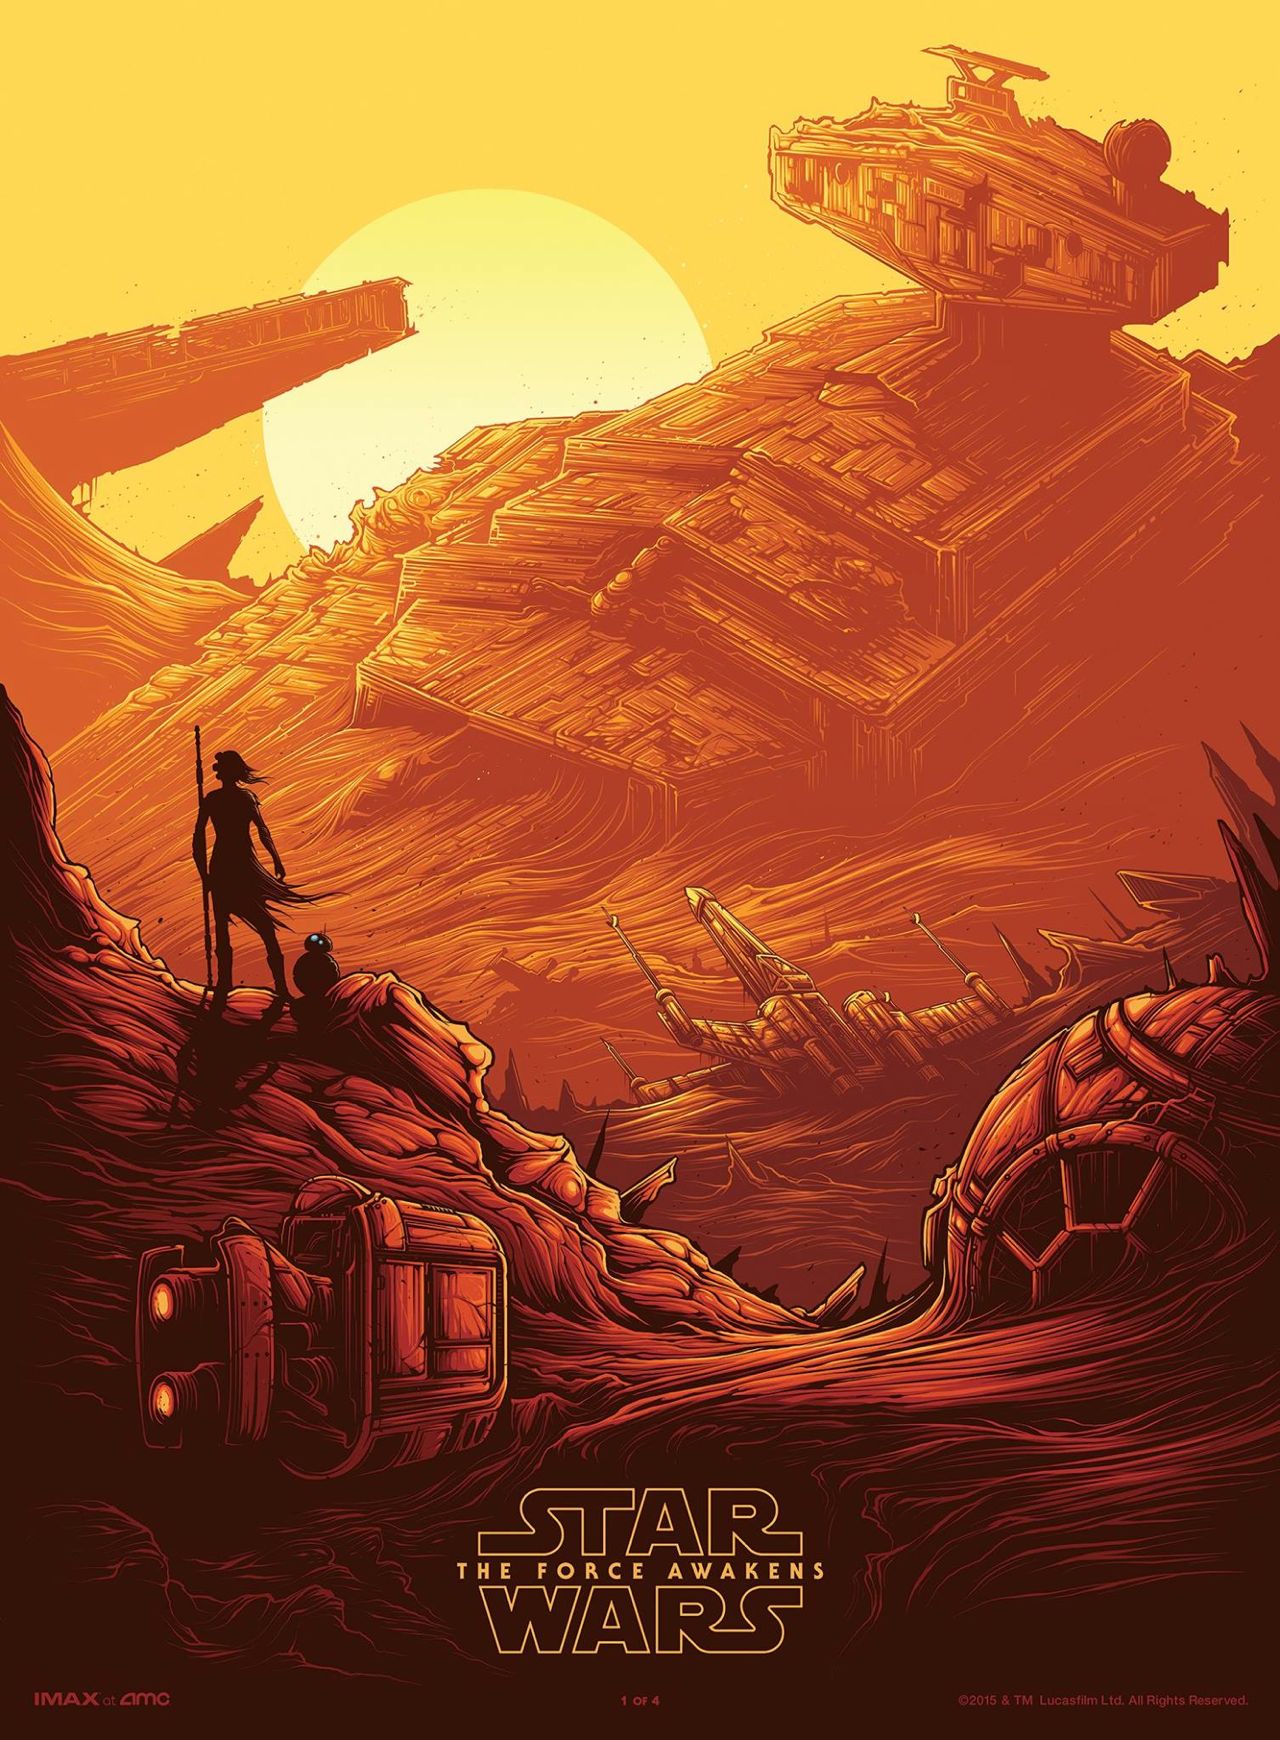 Star Wars: The Force Awakens AMC Poster #1